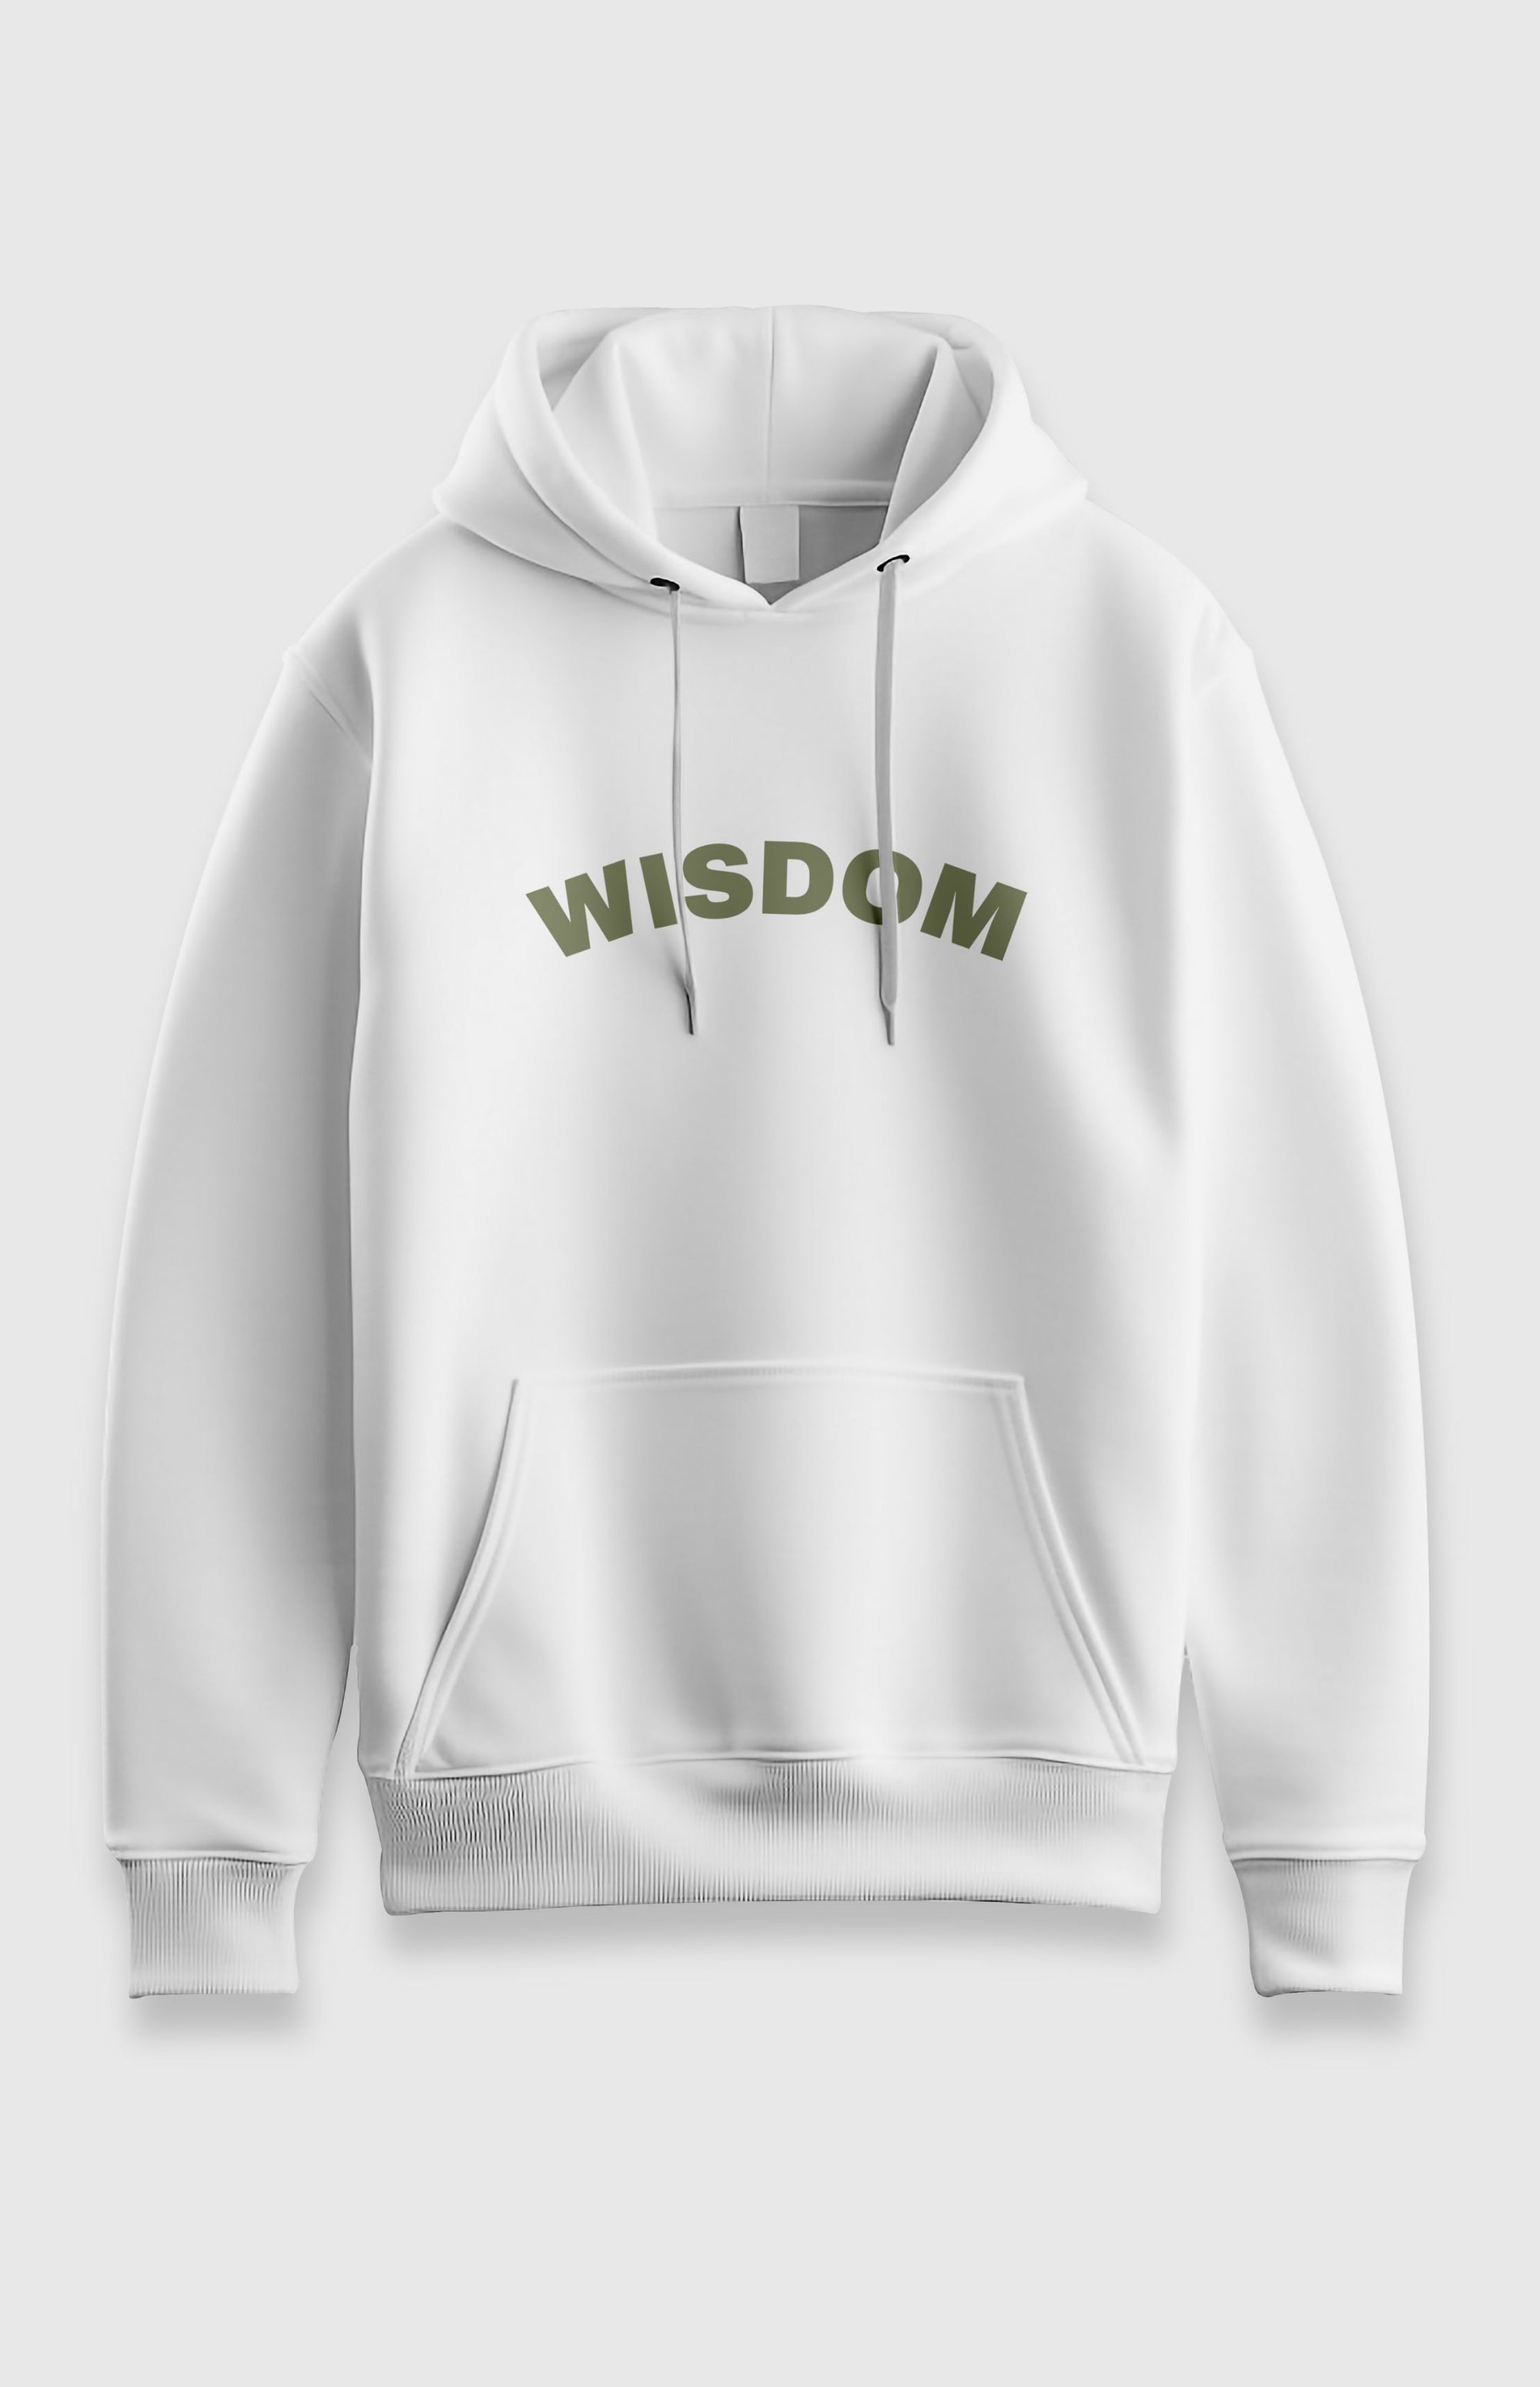 Wisdom Hoodie - White